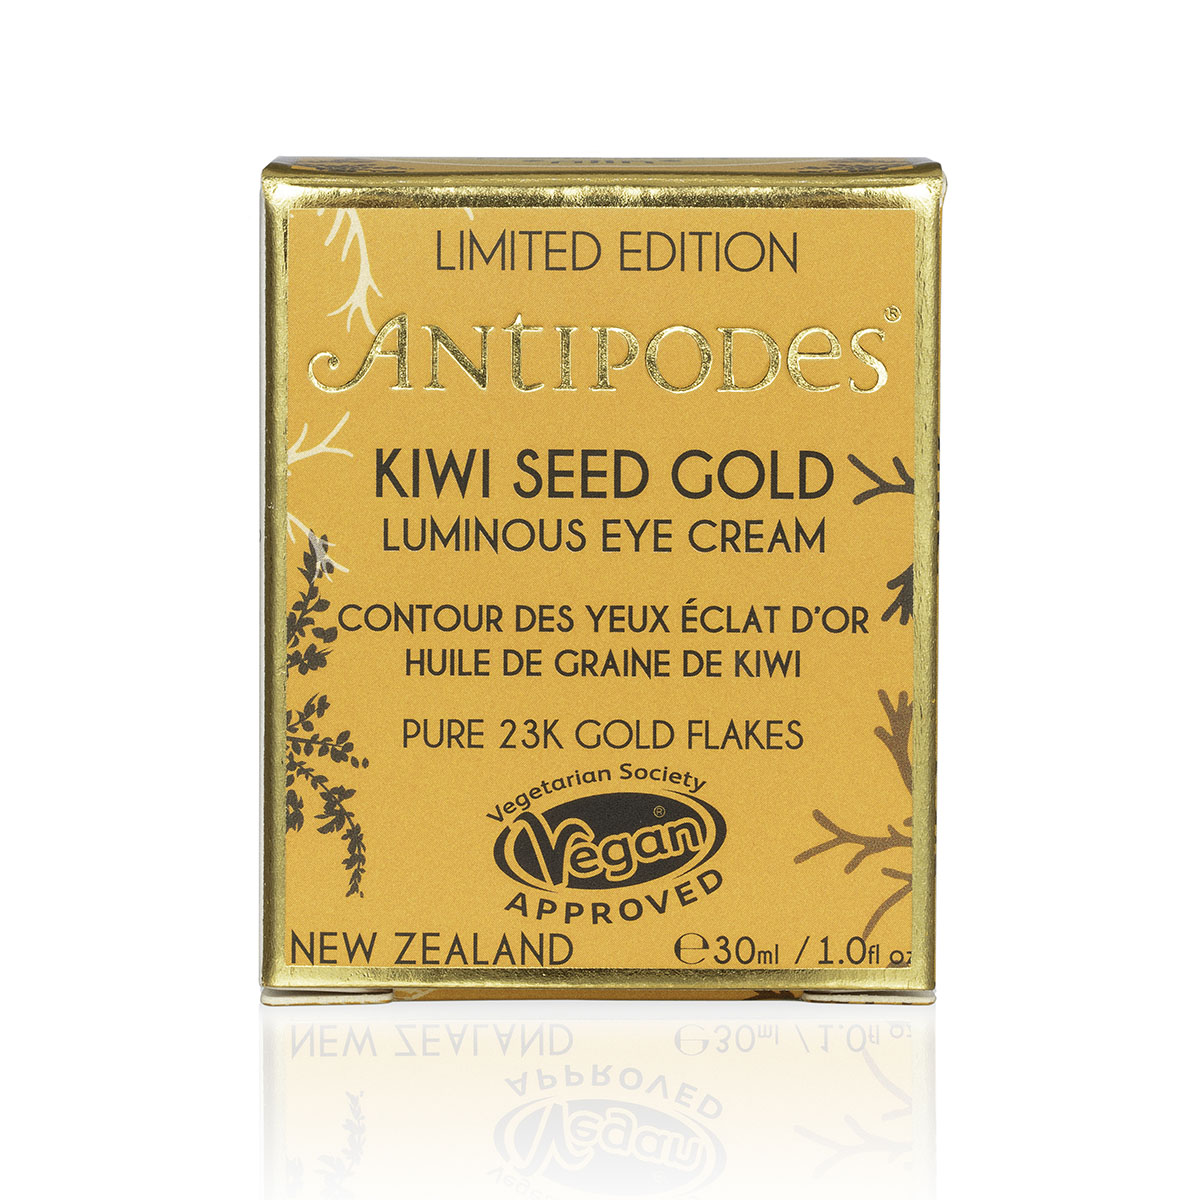 Antipodes-Kiwi-Seed-Gold-Eye-Cream-Box